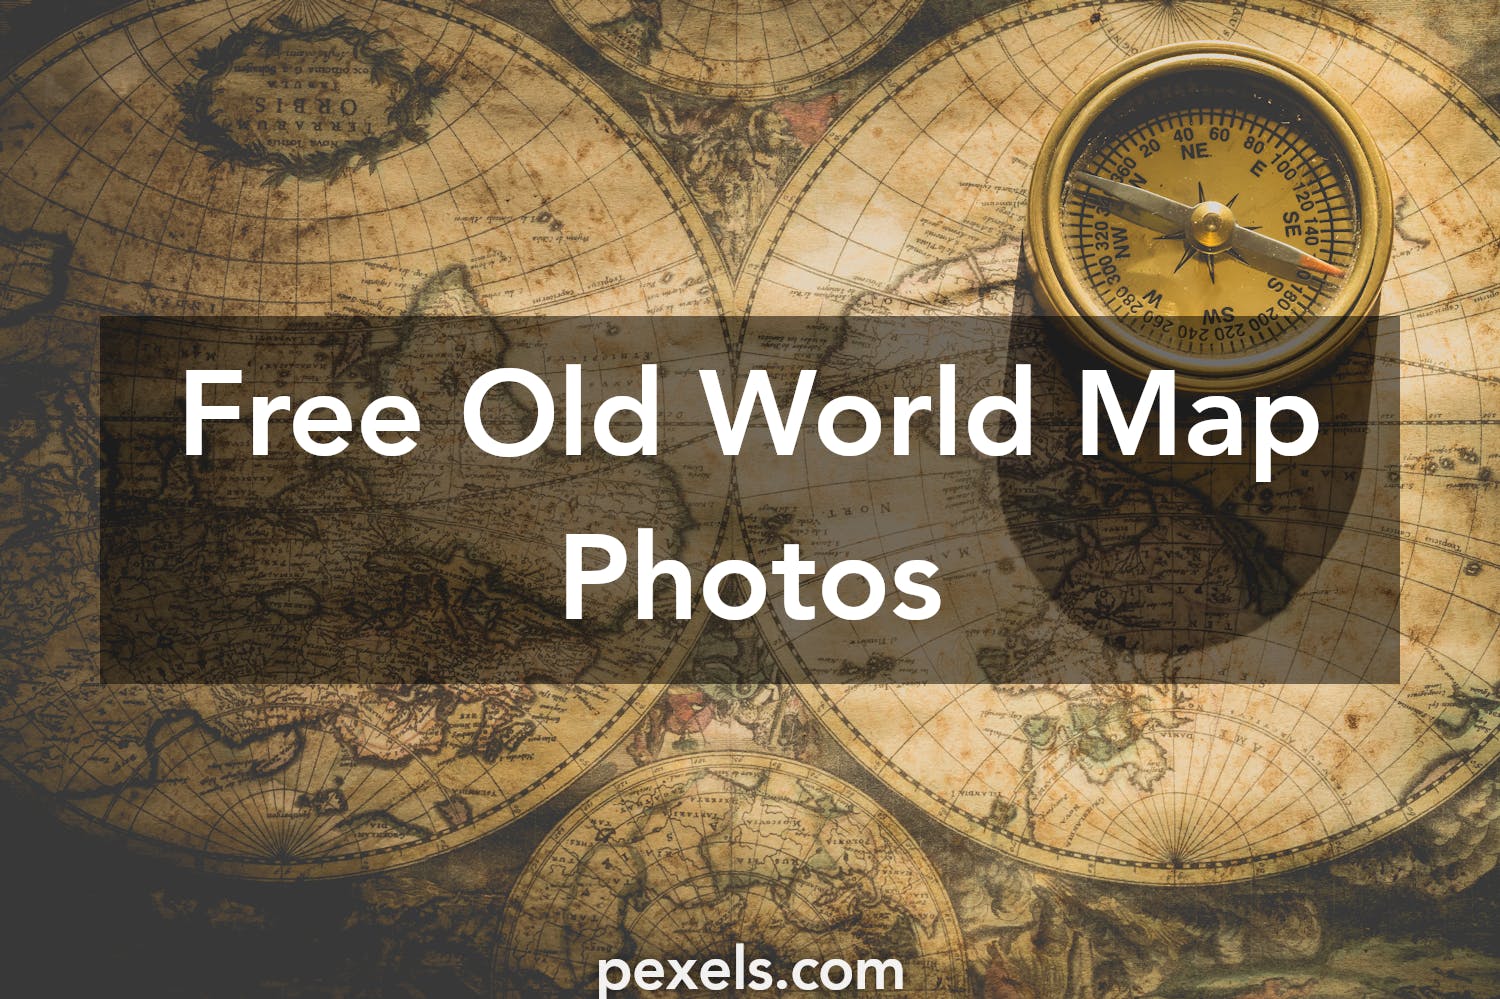 1000+ Interesting Old World Map Photos · Pexels · Free Stock Photos